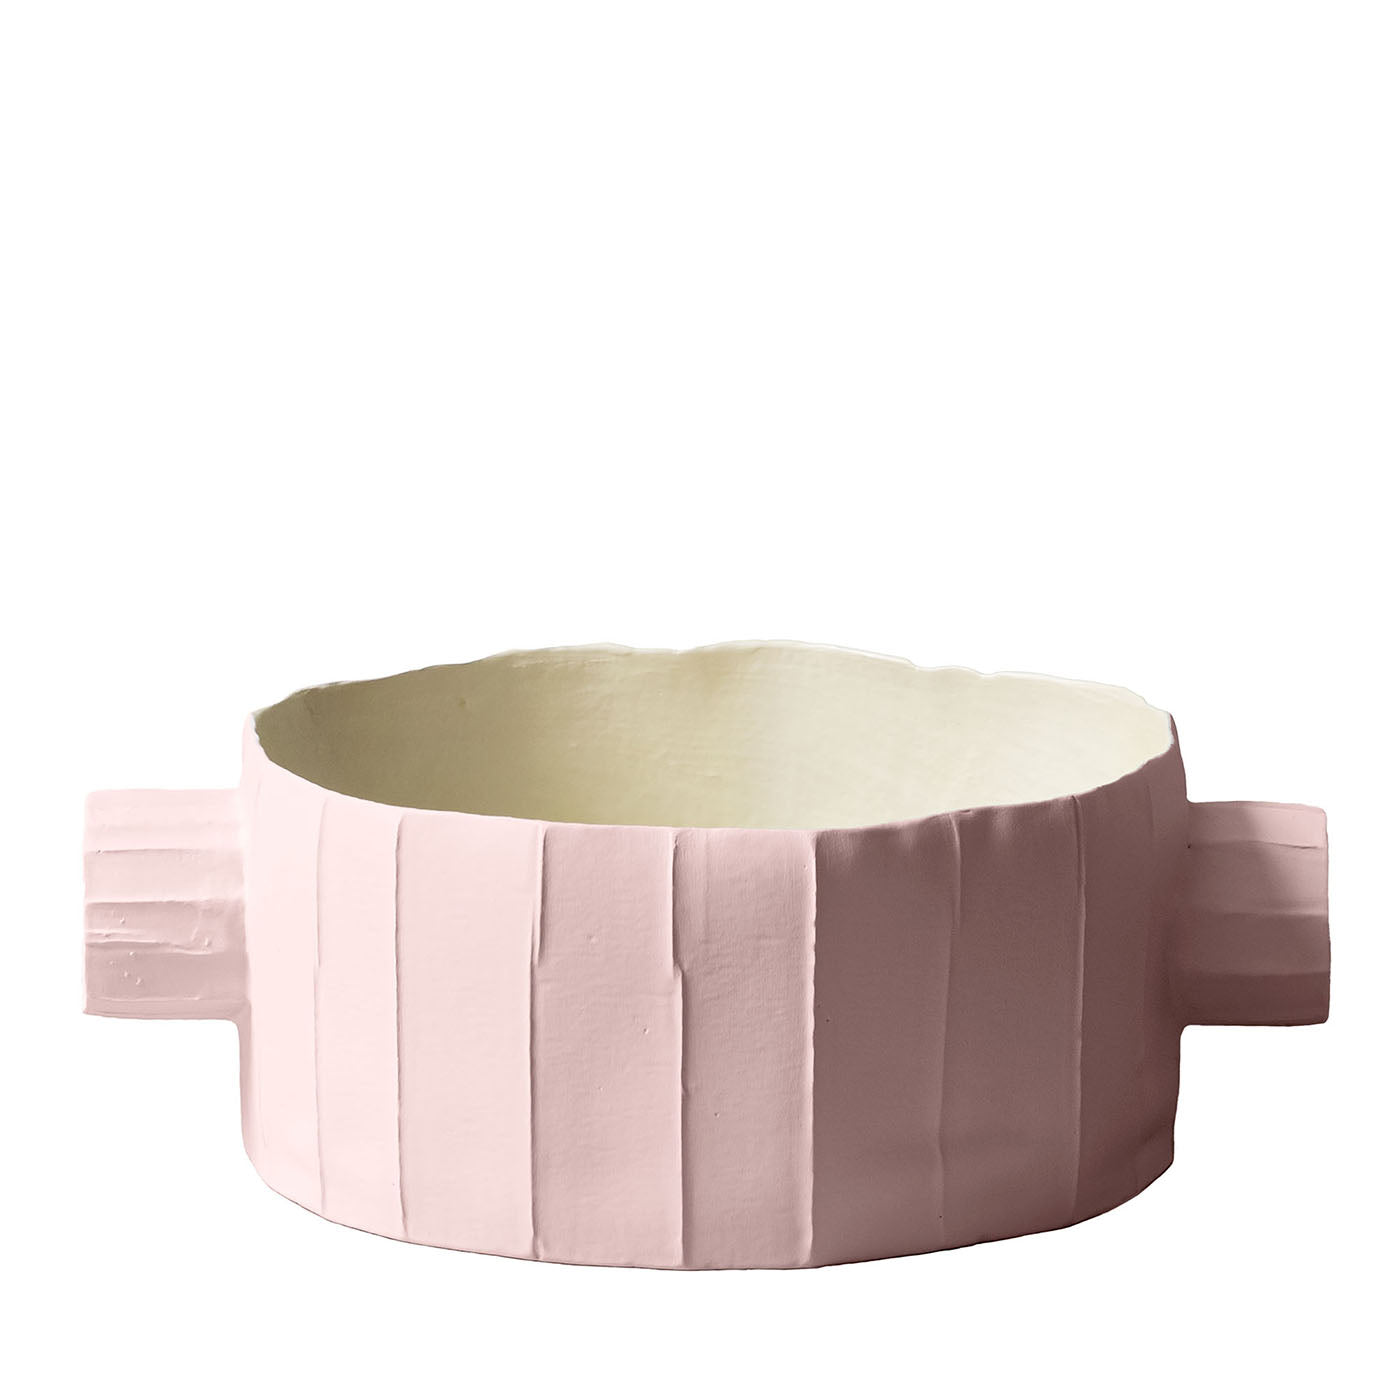 VasoPino Bis in ceramica rosa - Vista principale